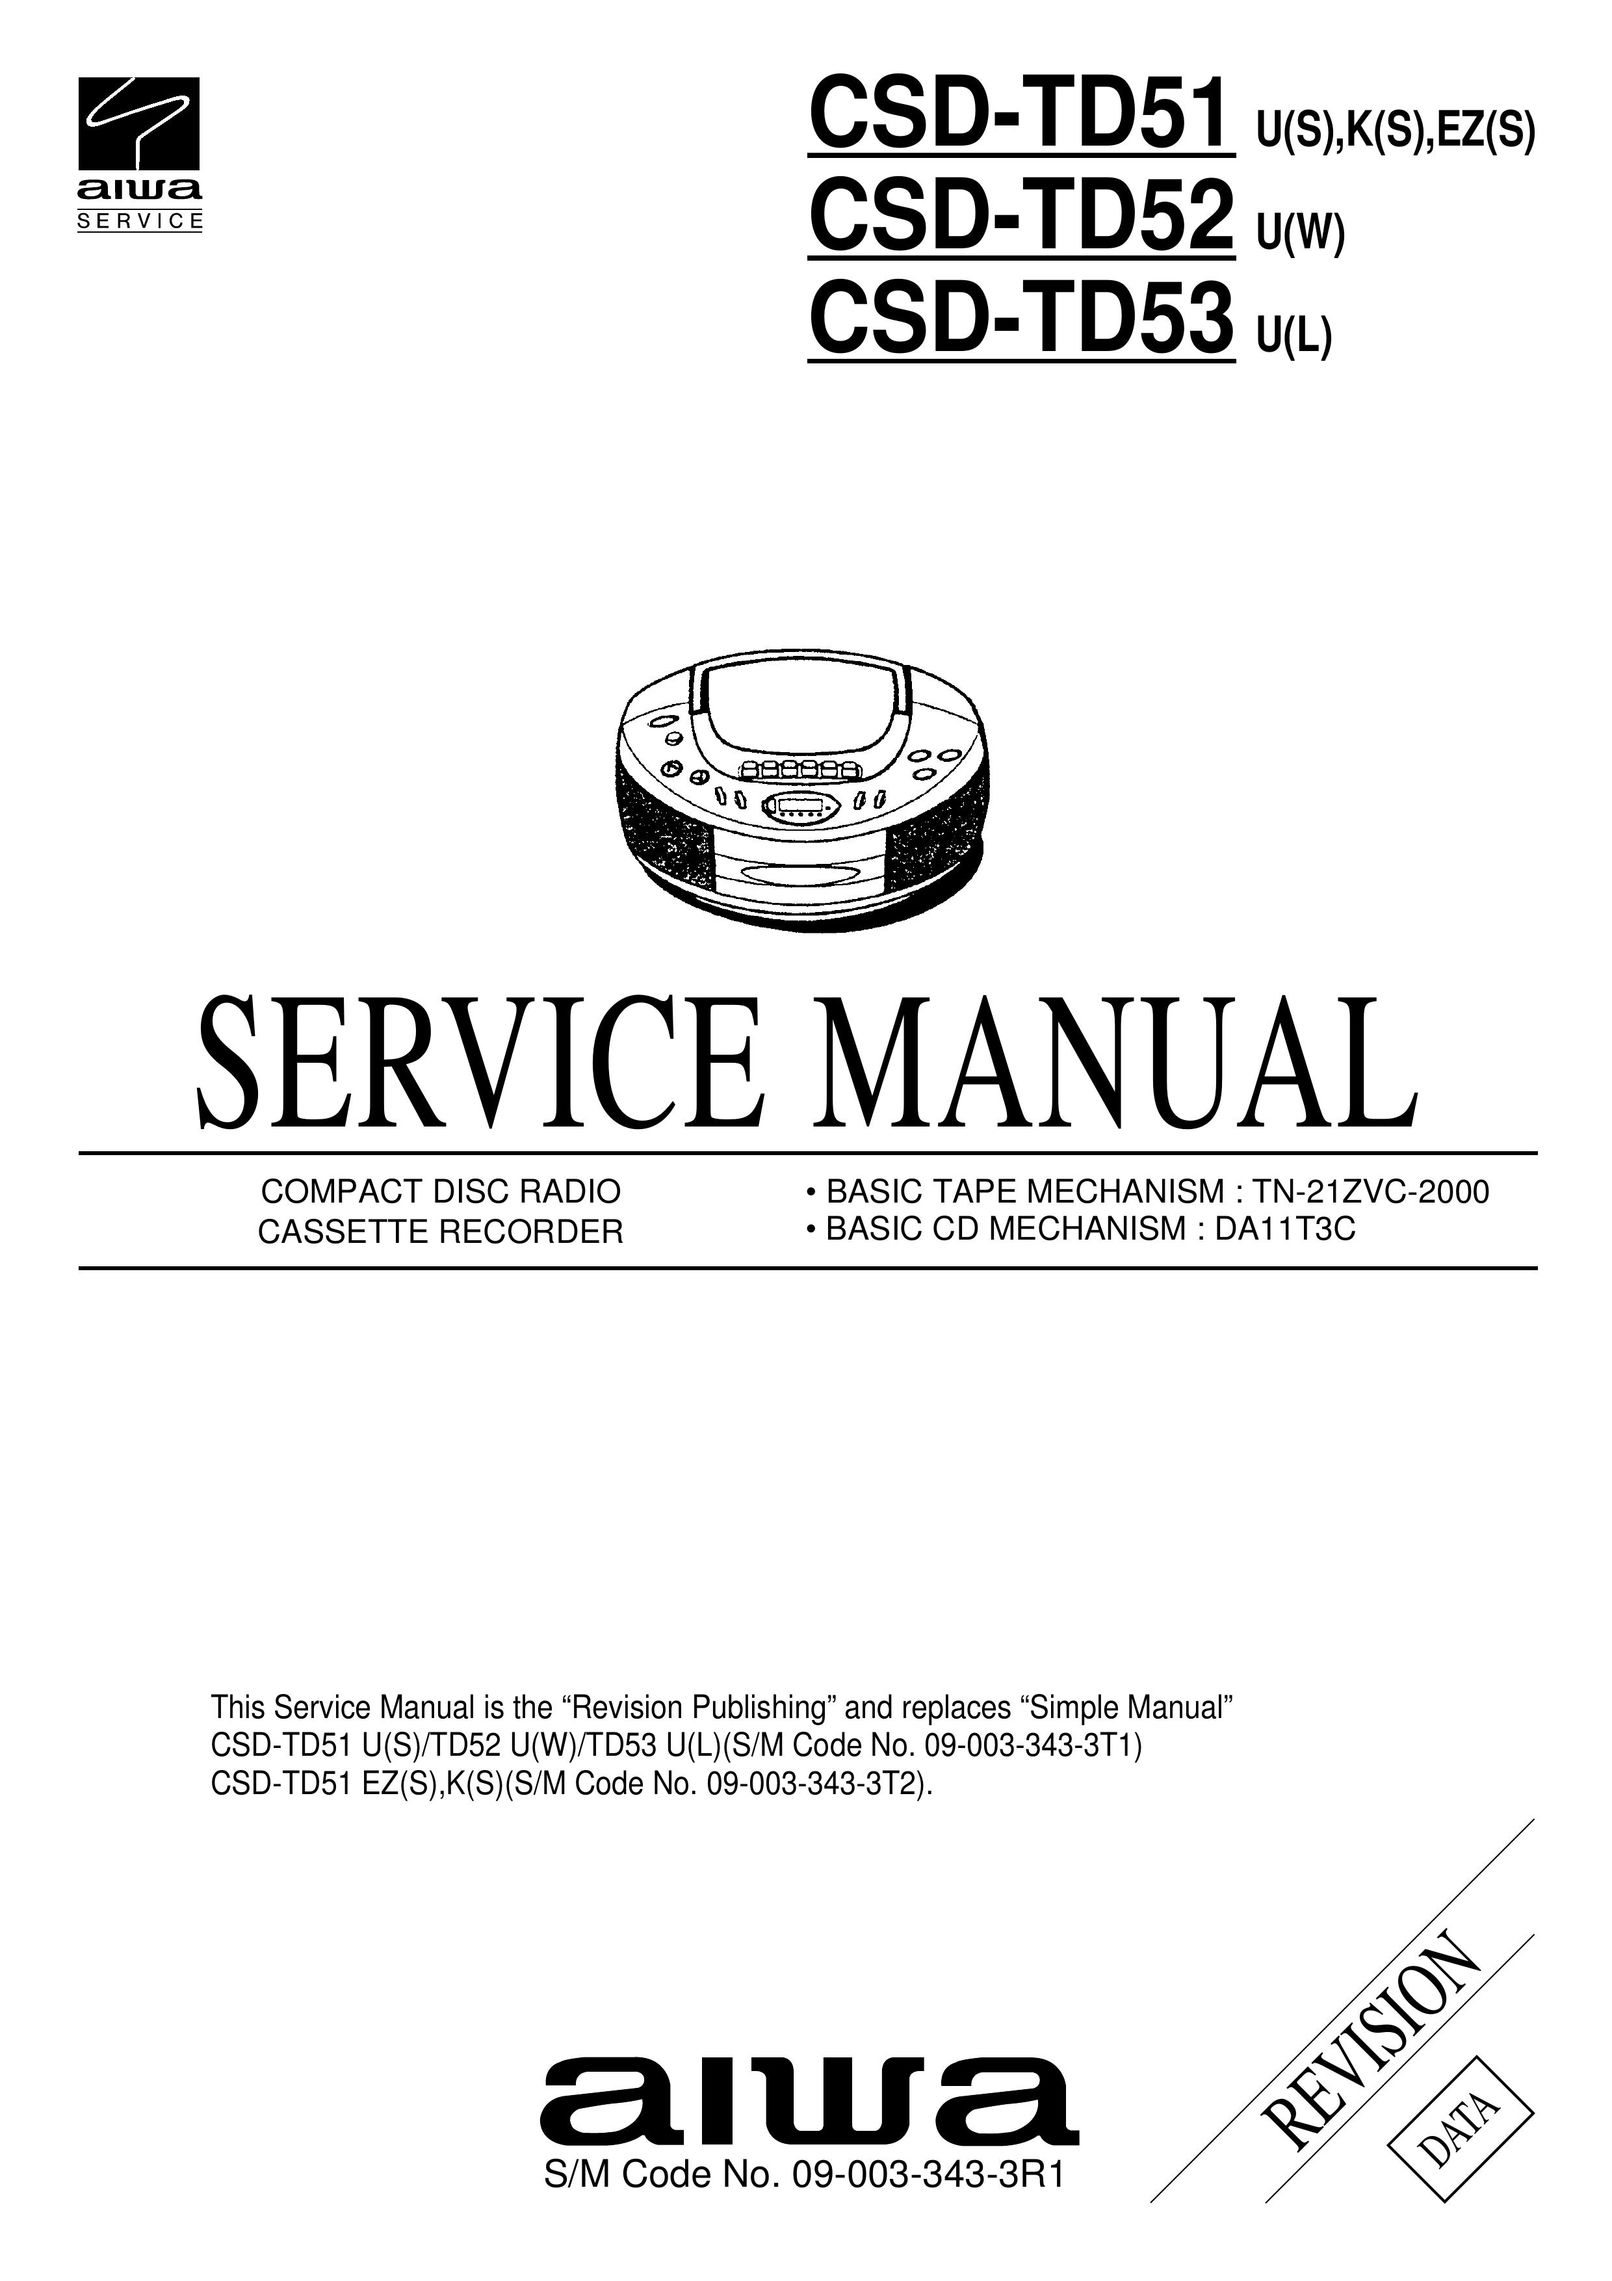 Aiwa CSD-TD52 CD Player User Manual